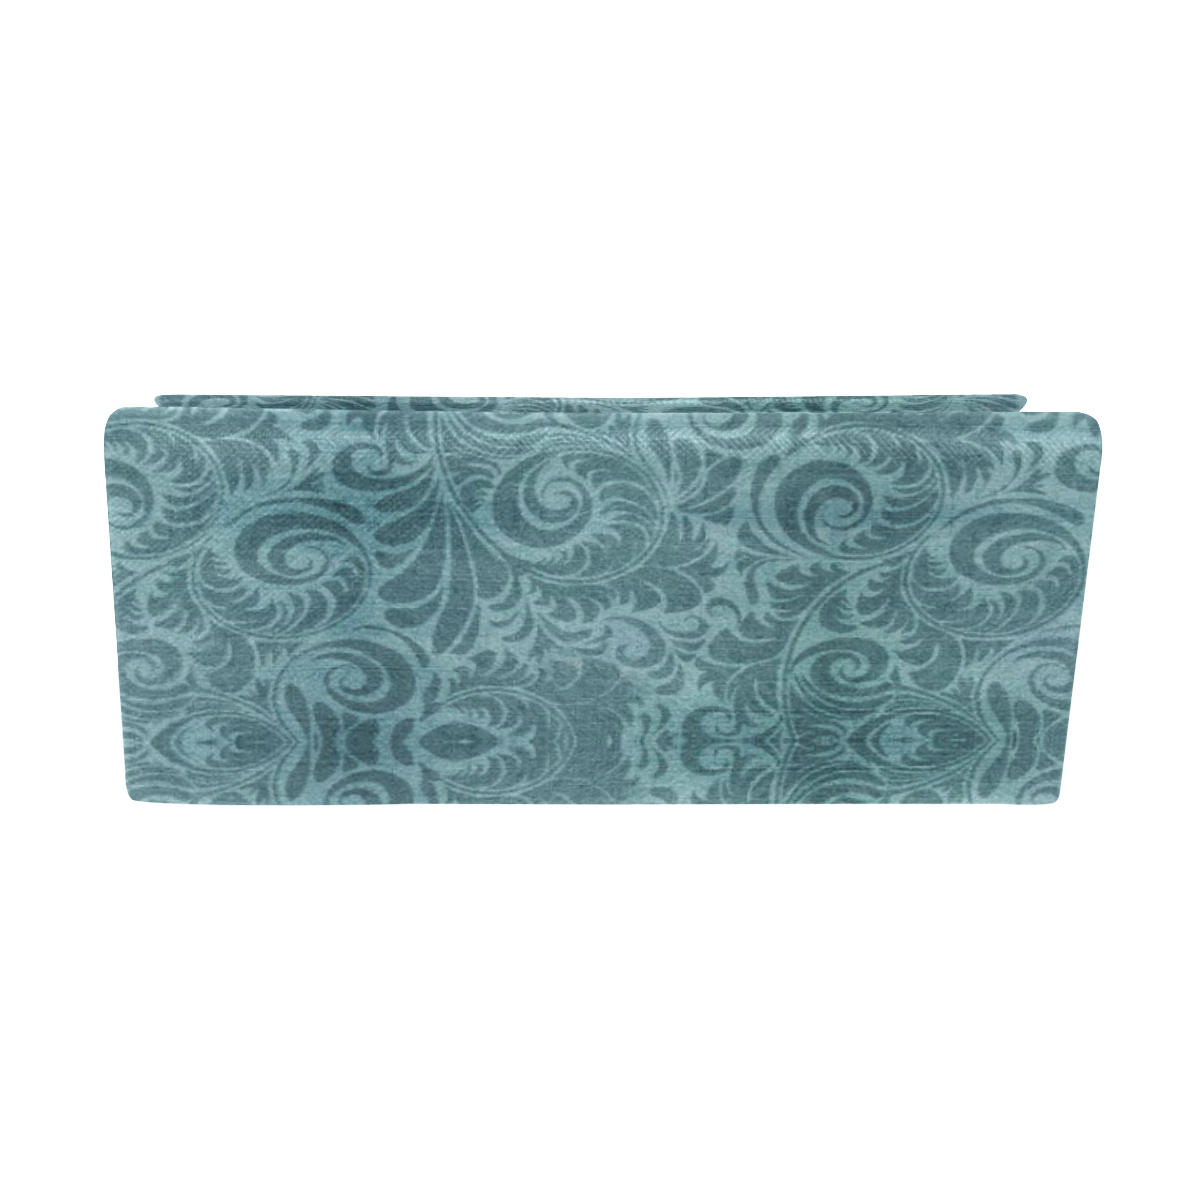 Denim with vintage floral pattern, turquoise teal Custom Foldable Glasses Case